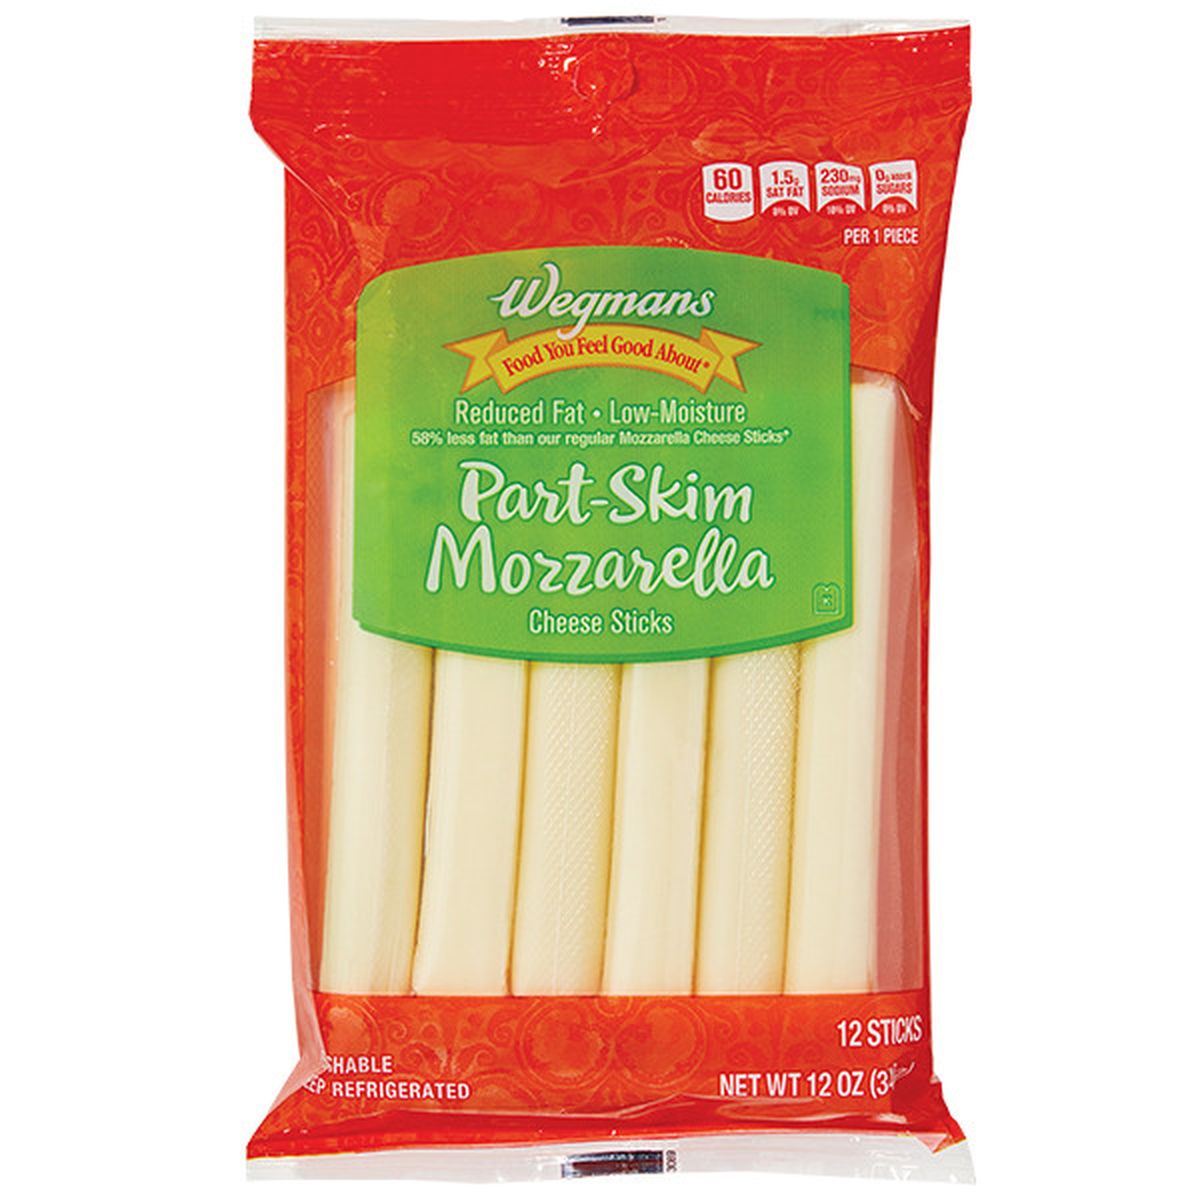 Calories in Wegmans Reduced Fat Part-Skim Mozzarella Cheese Sticks, 12 Count